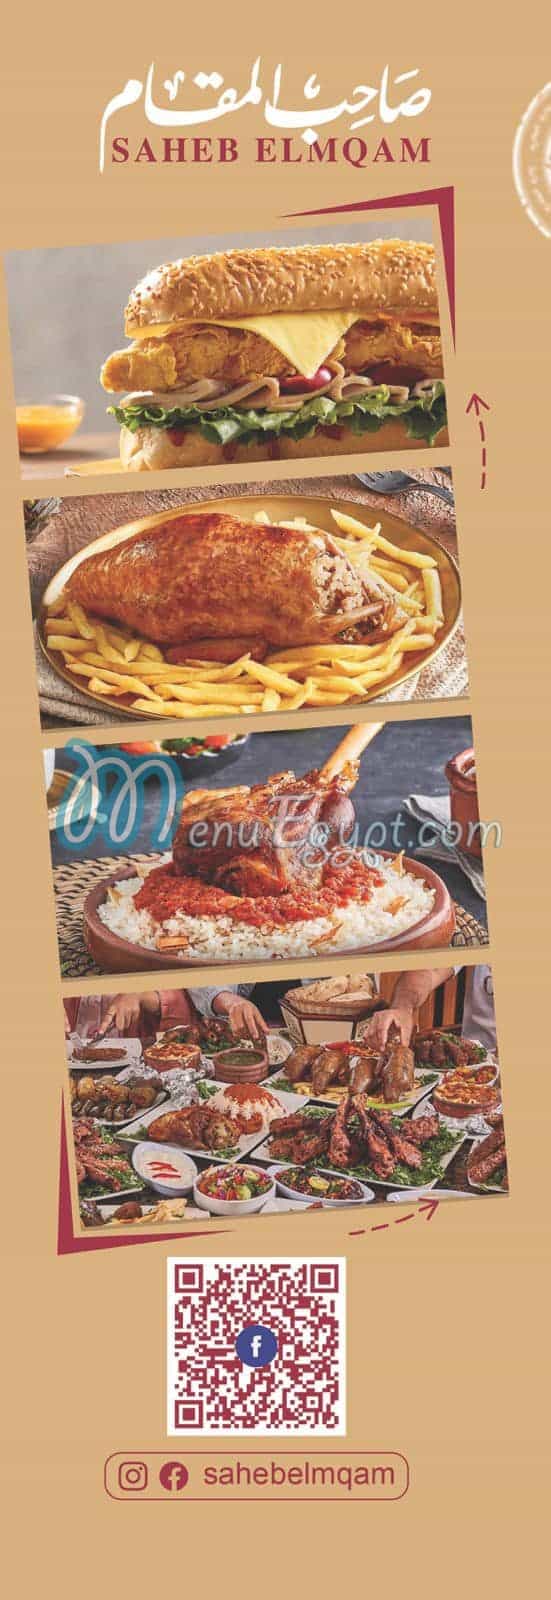 Saheb Almqam restaurant menu Egypt